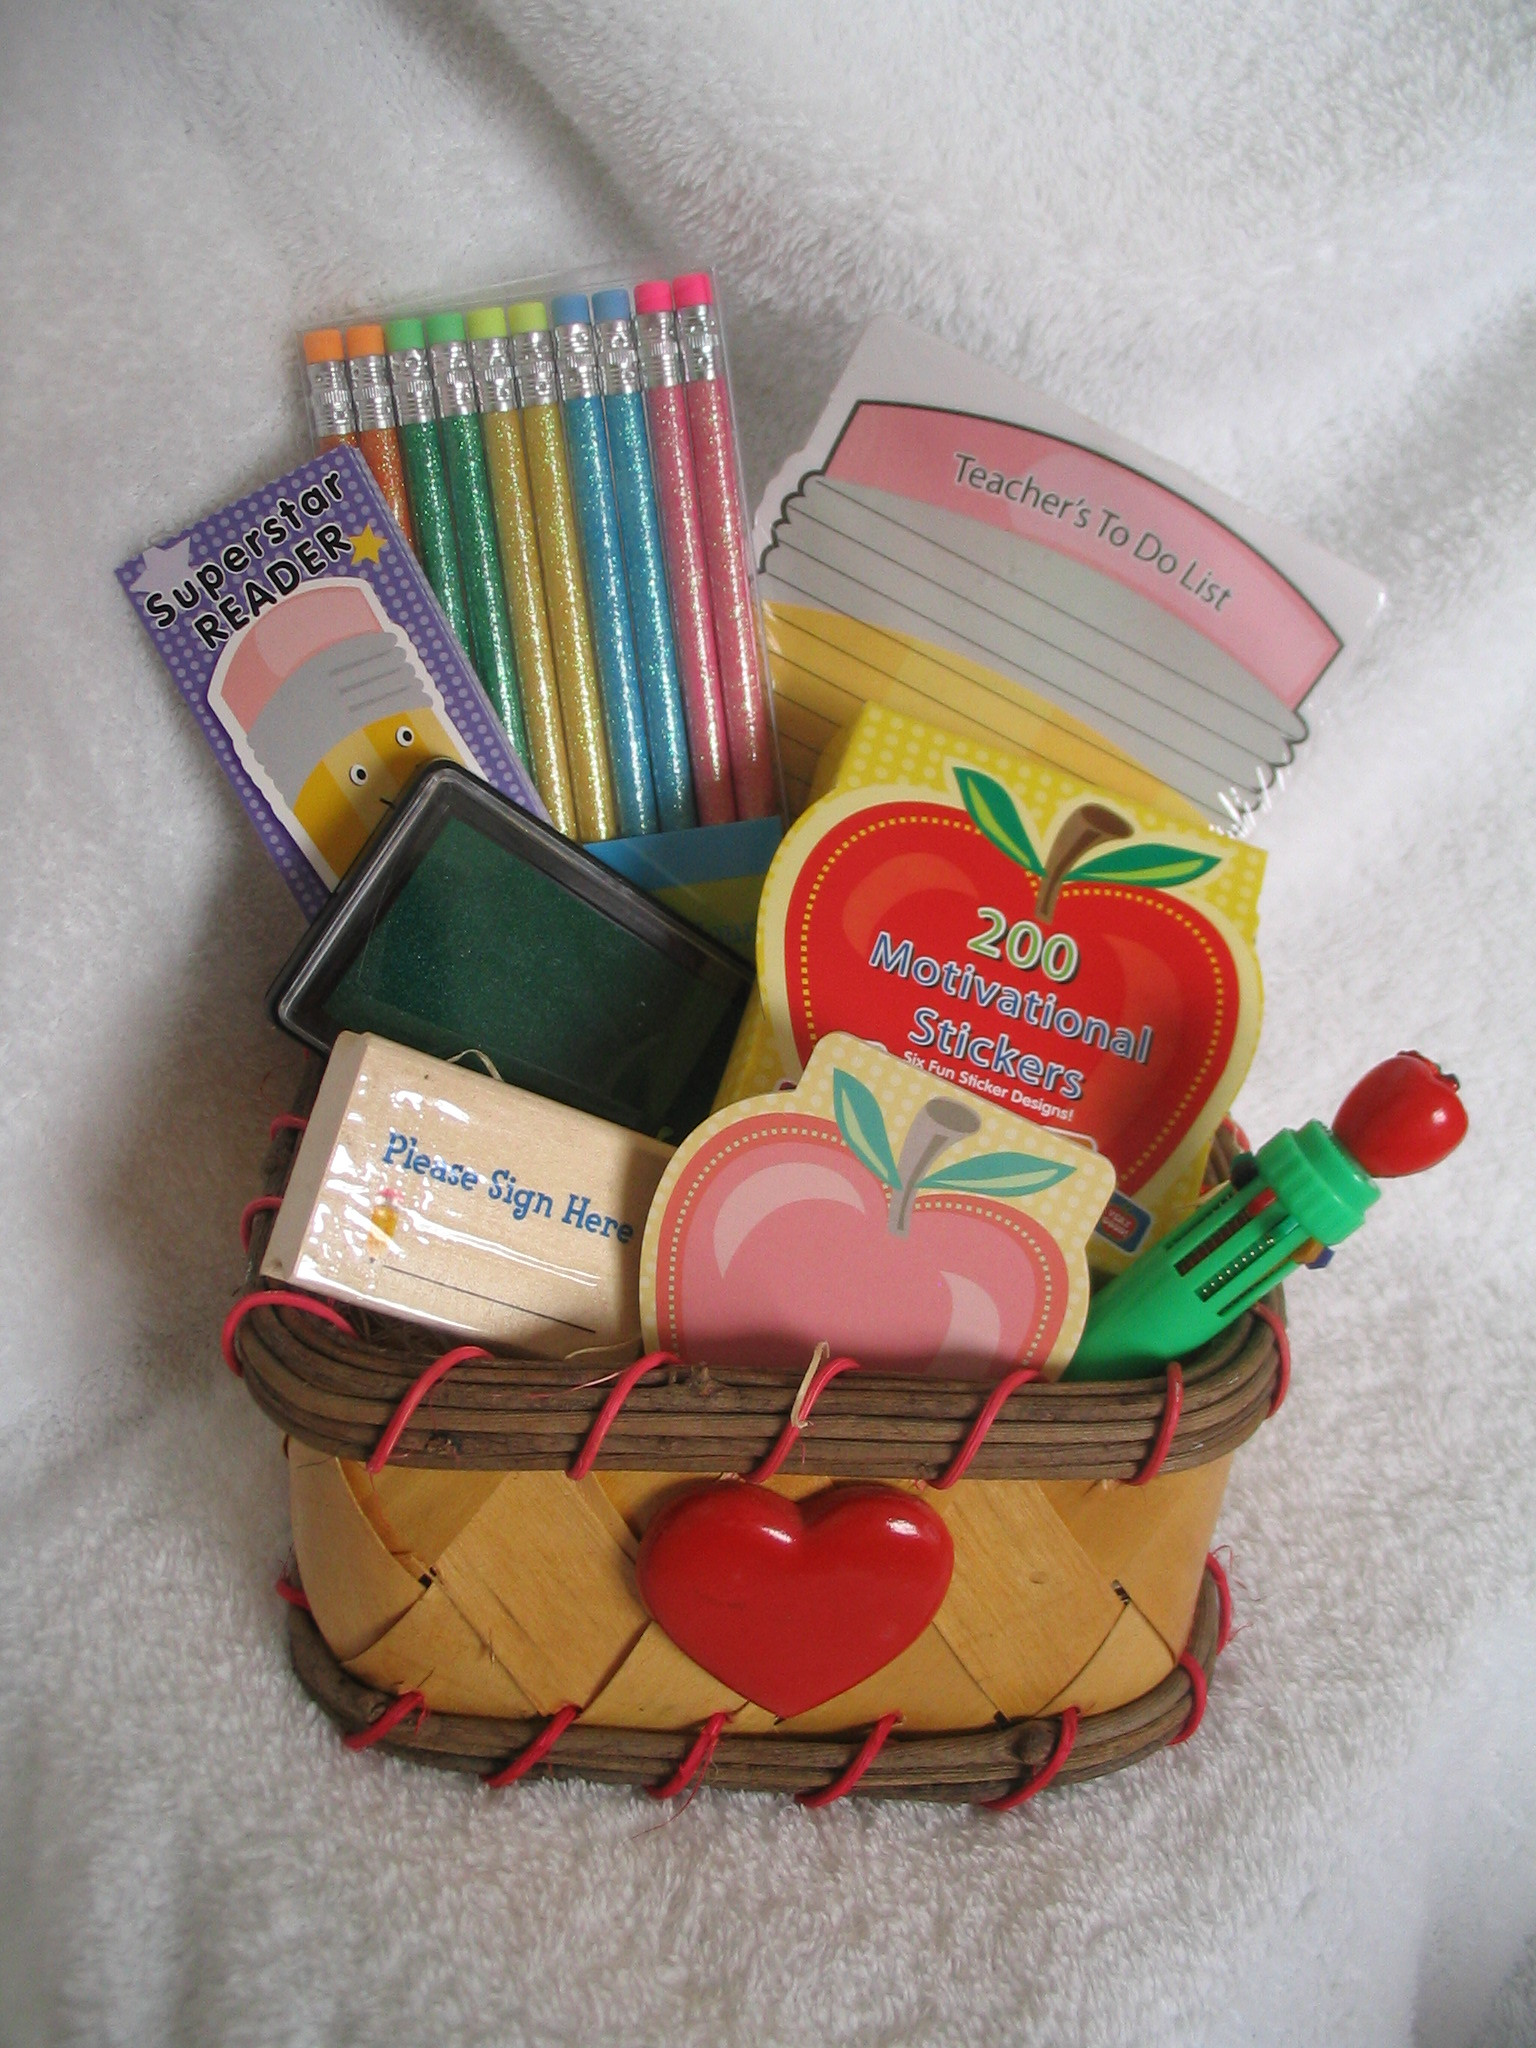 Teacher Gift Baskets Ideas
 The Basket Case